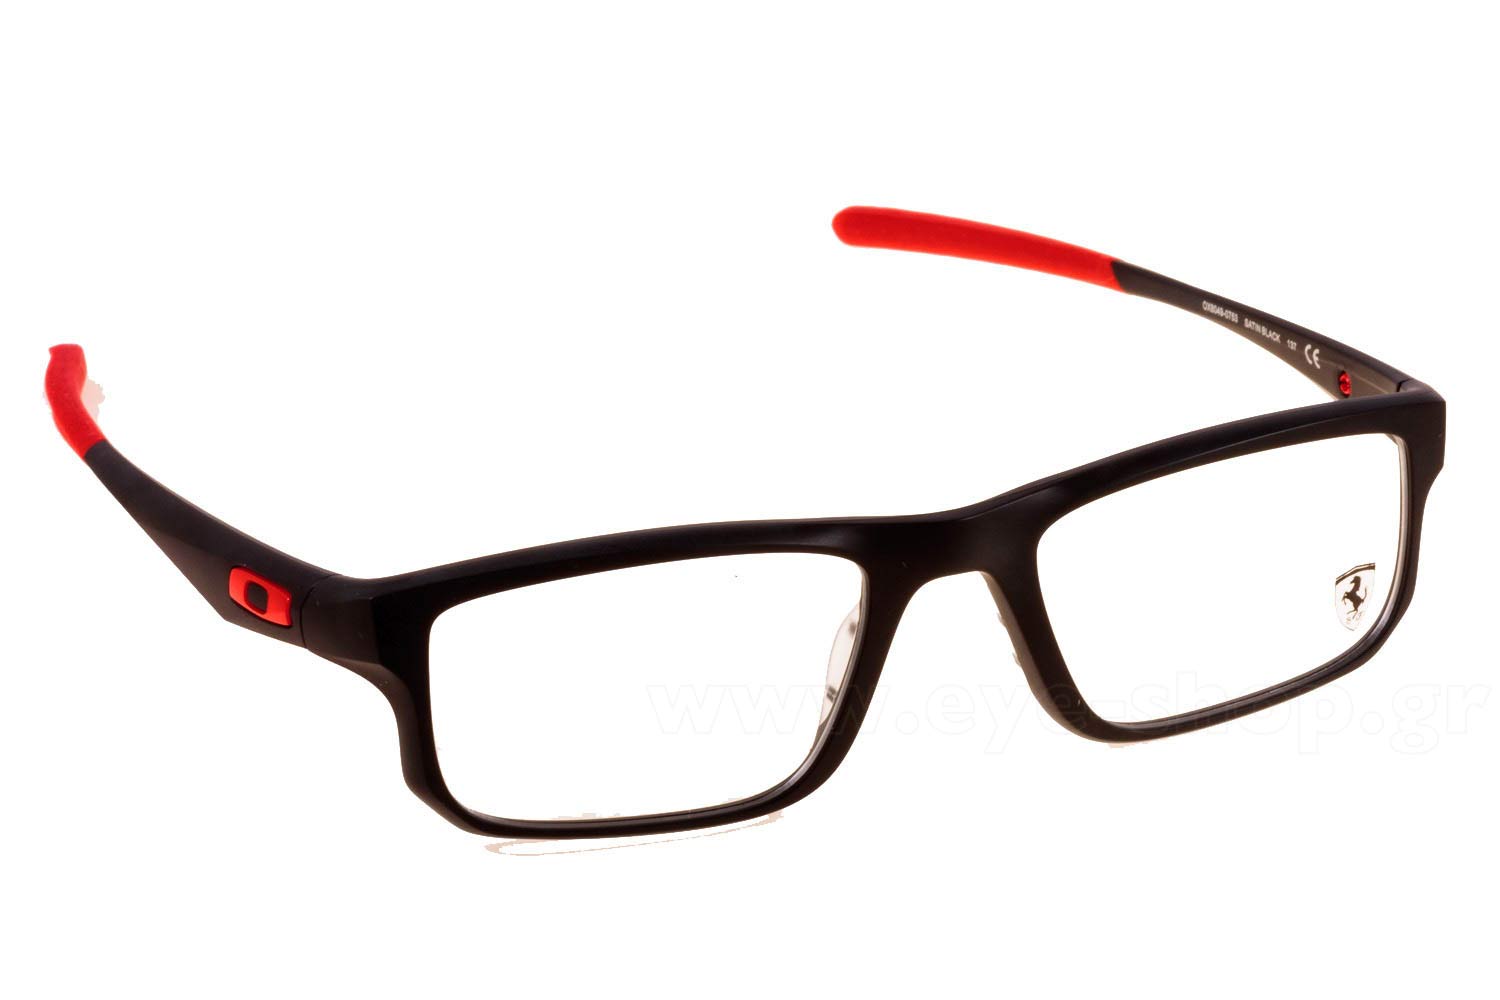 oakley reading glasses for sale